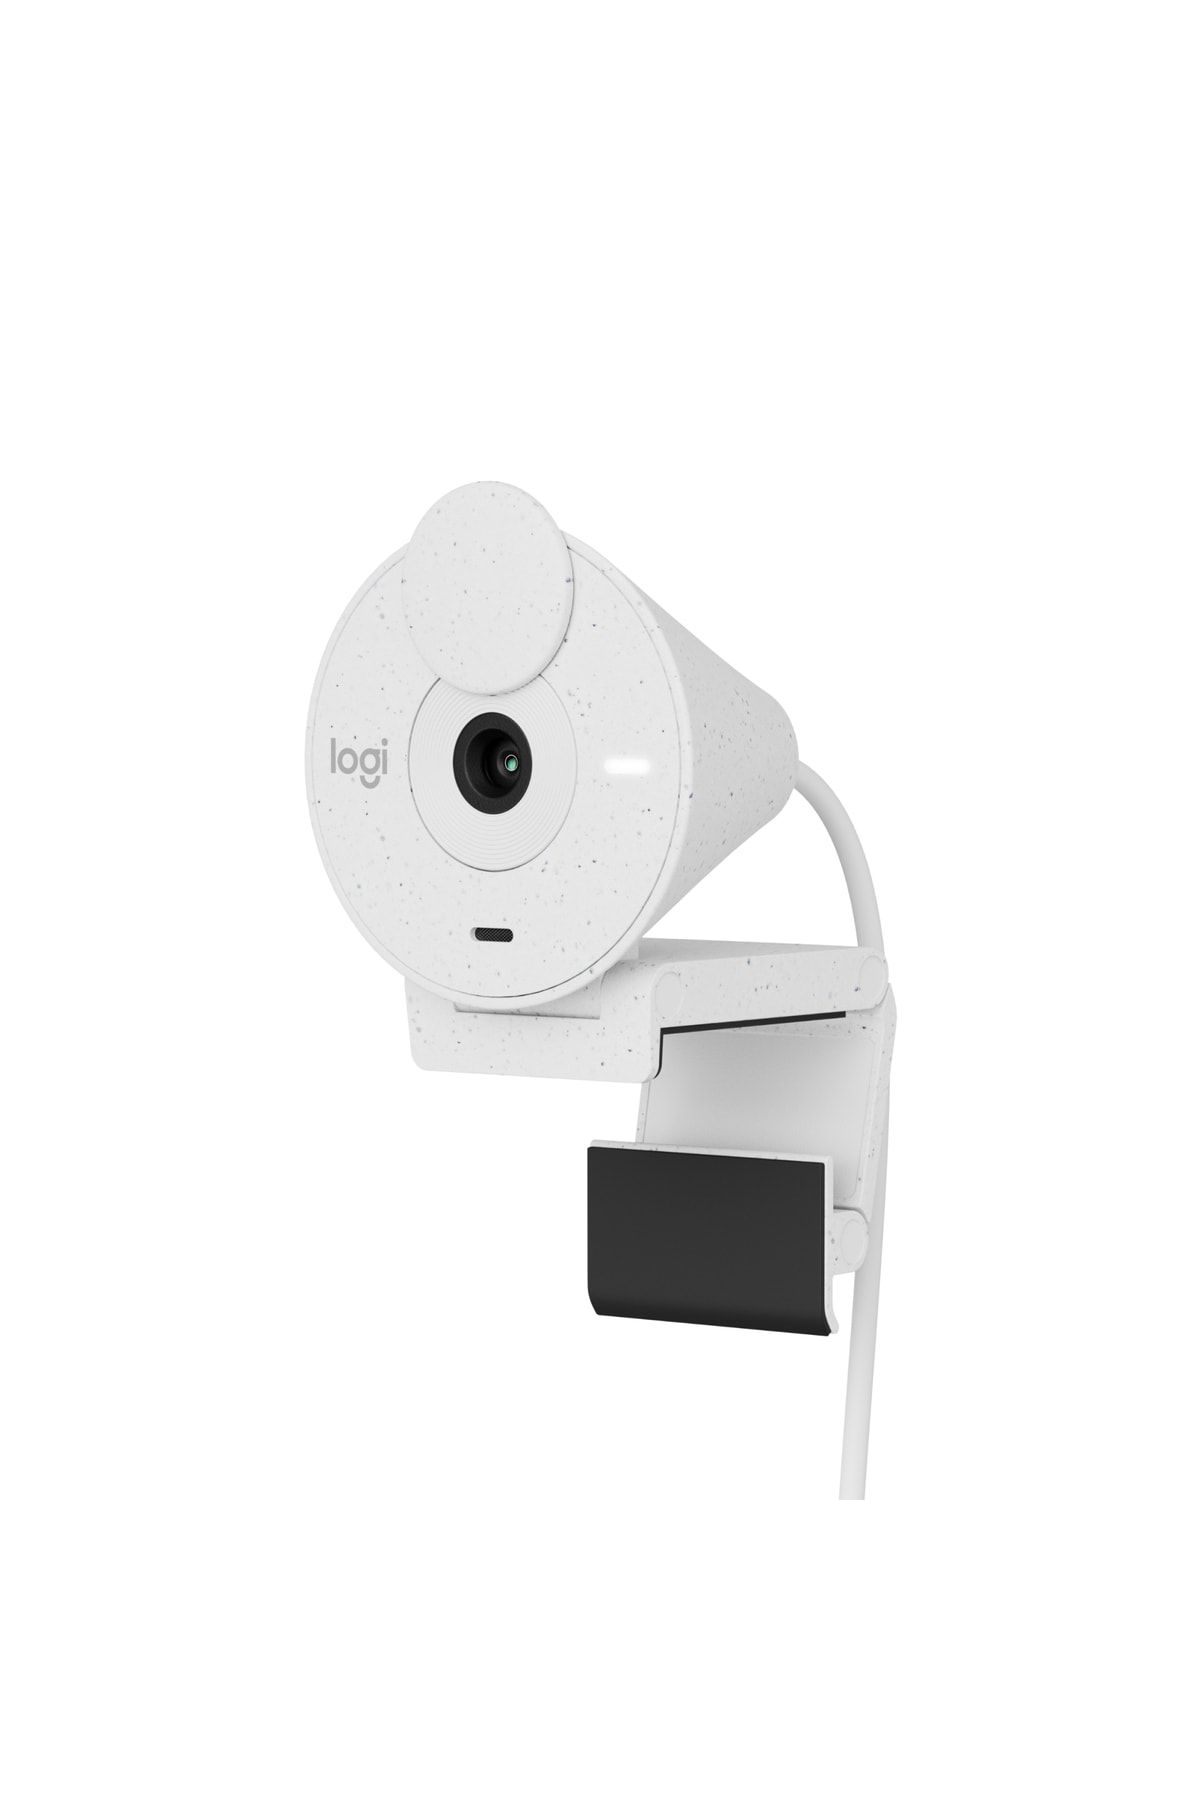 logitech Brio 300 Full Hd Webcam - Beyaz 960-001442